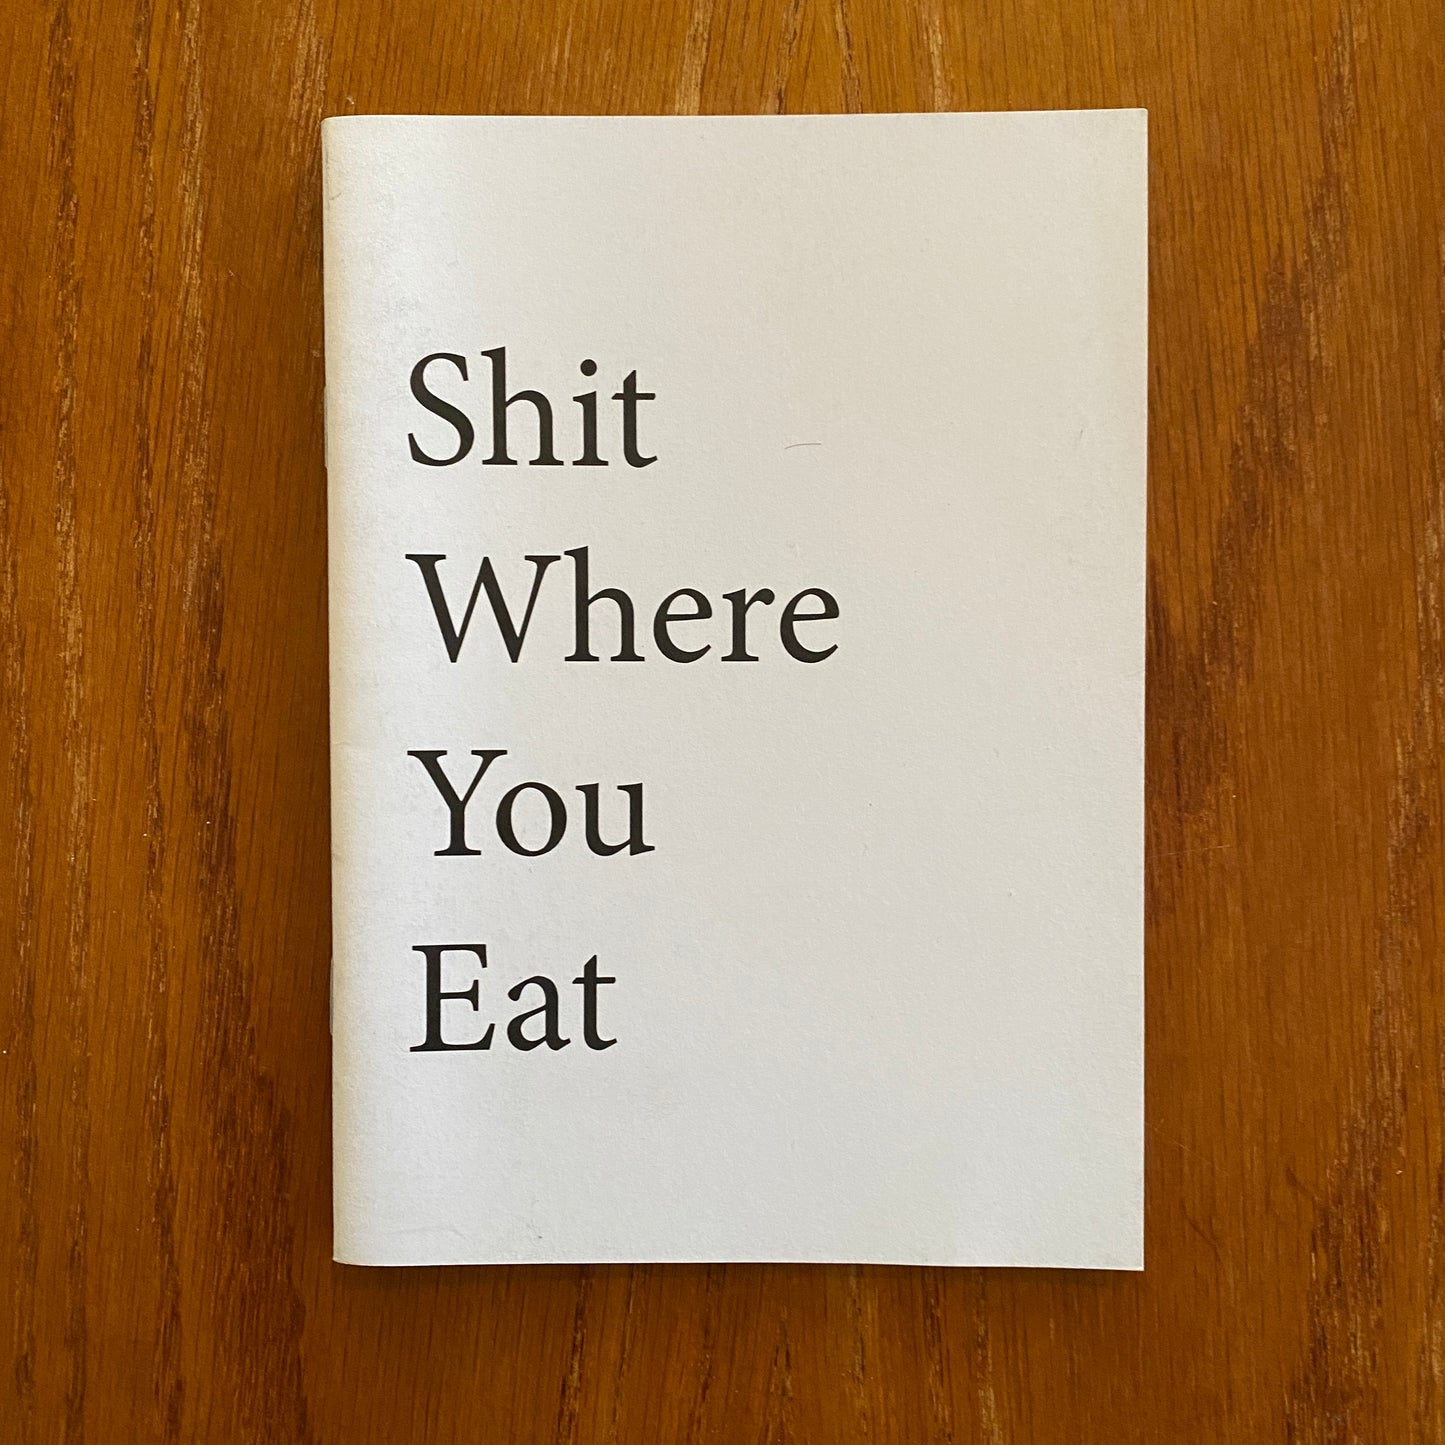 Shit Where You Eat 1